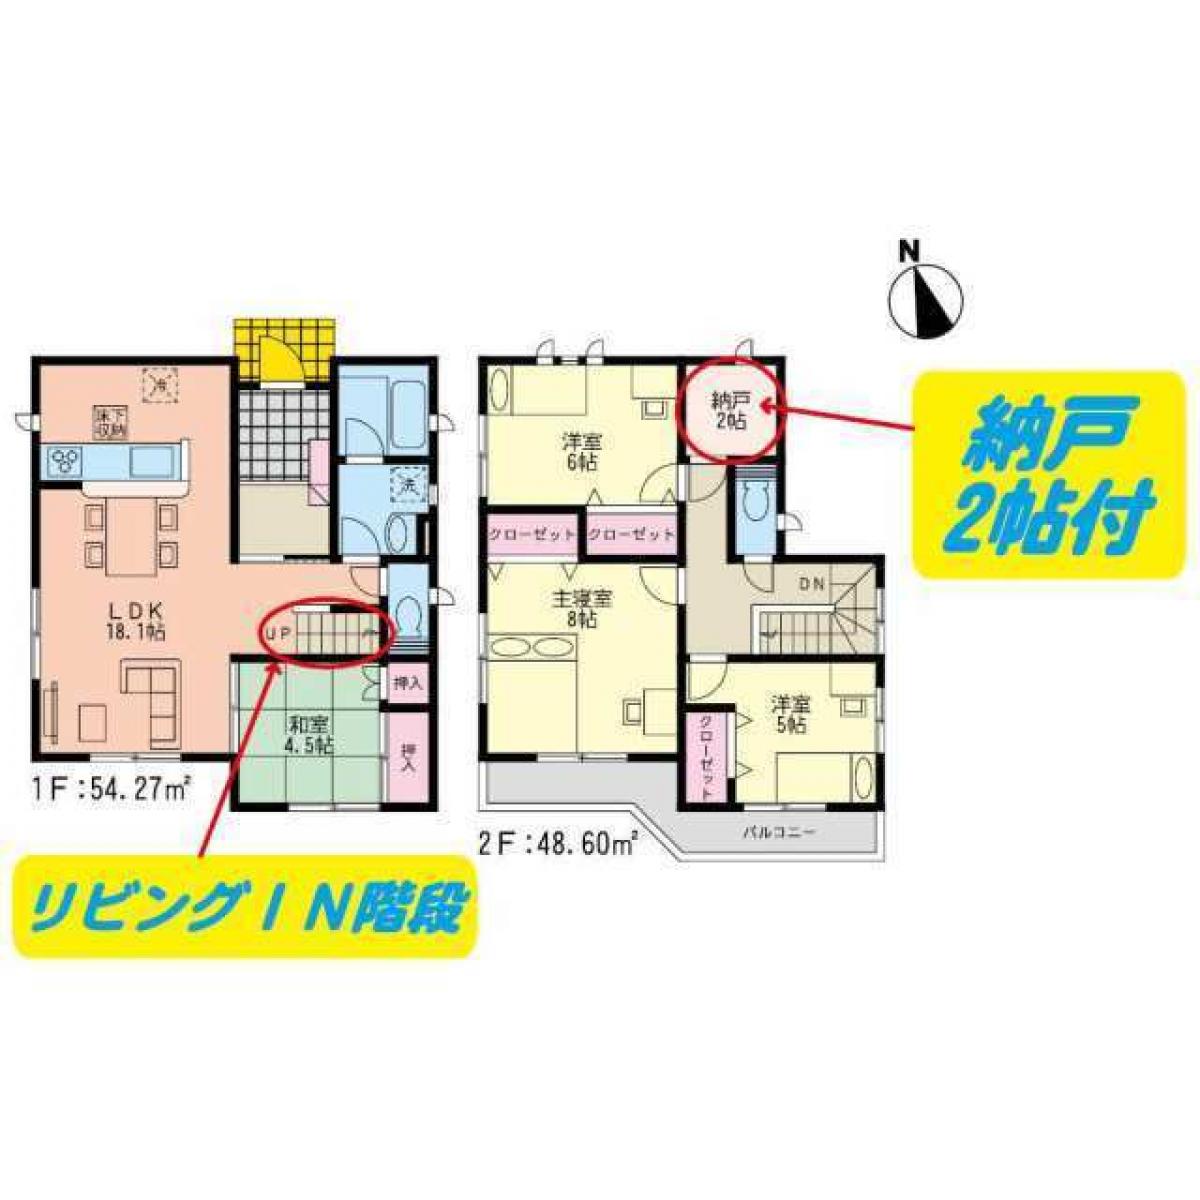 Picture of Home For Sale in Koga Shi, Fukuoka, Japan